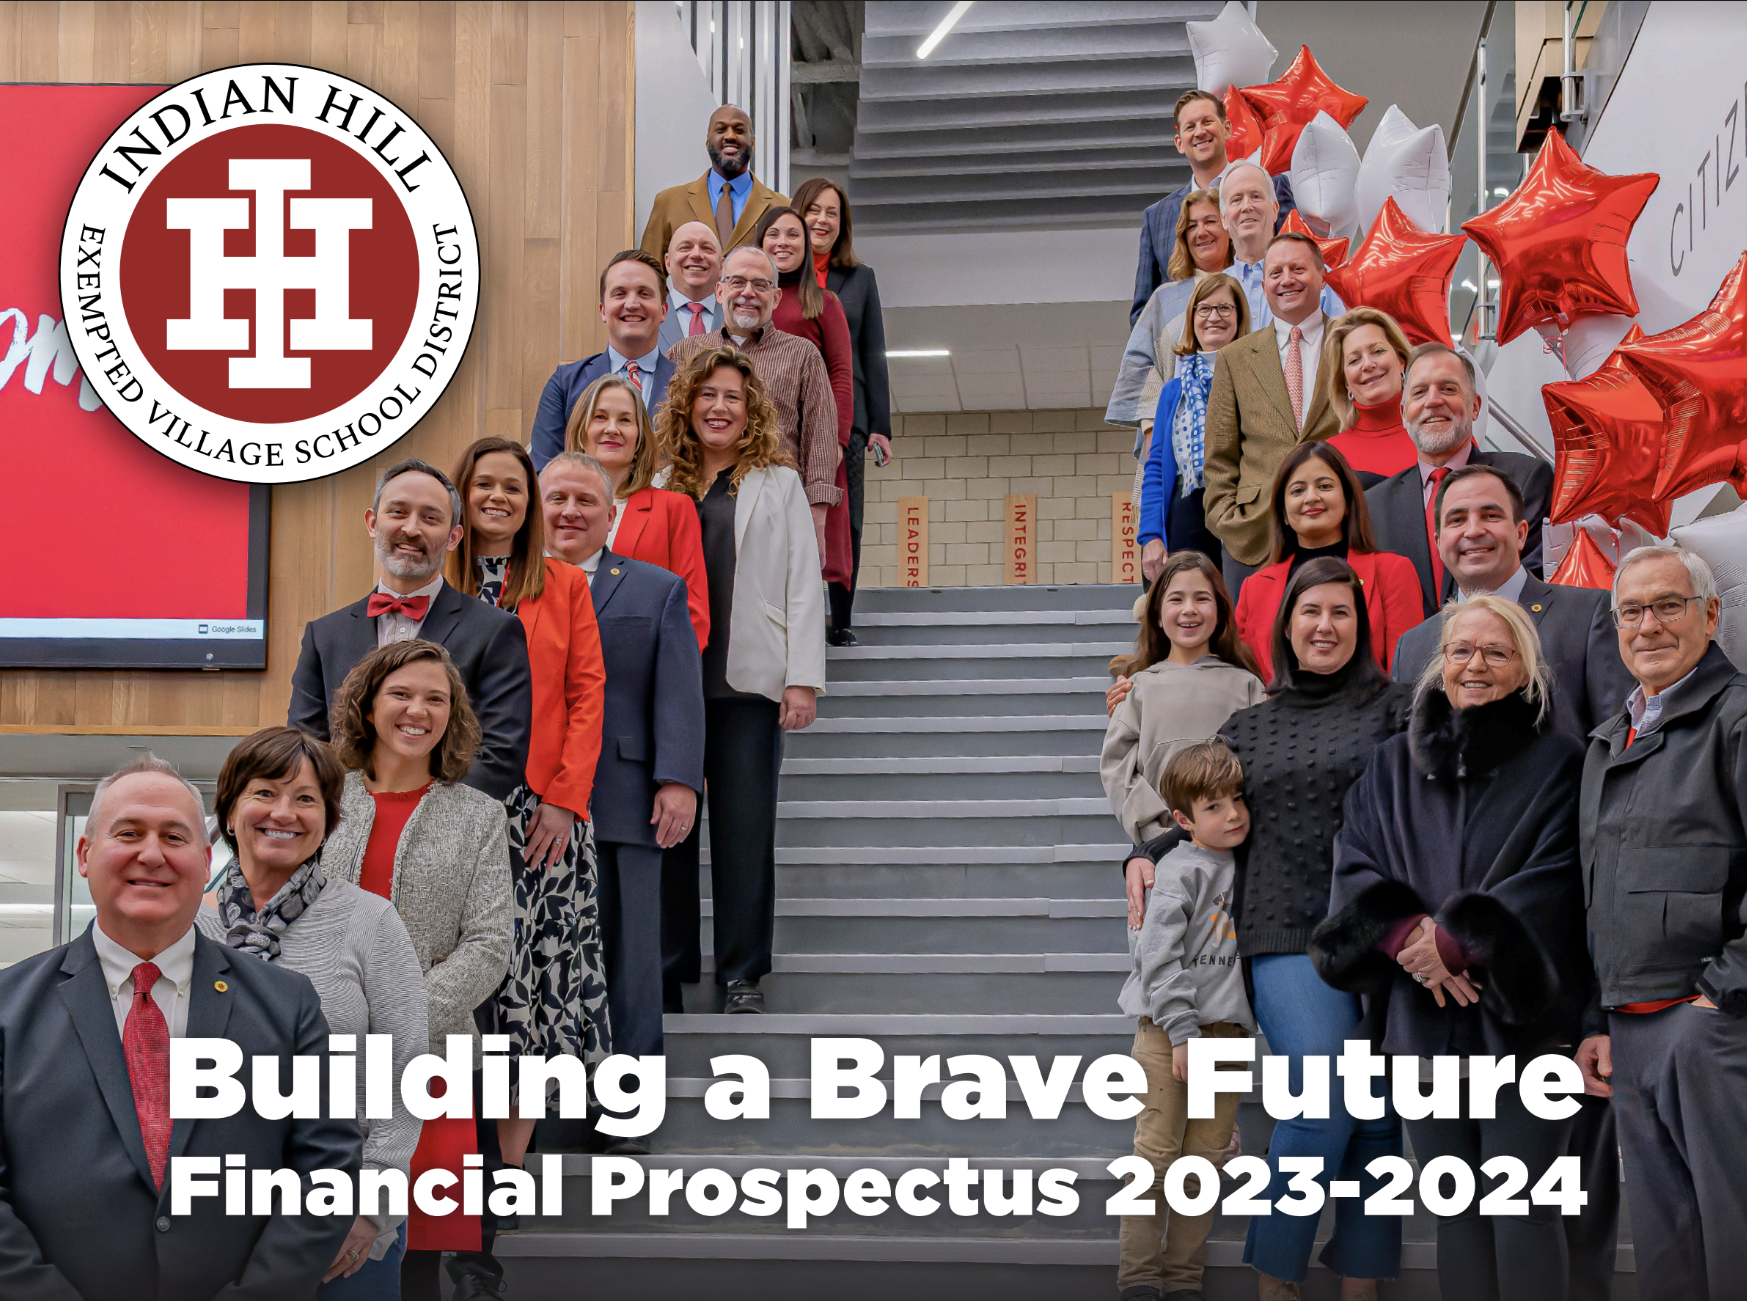 Financial Prospectus 2023-2024